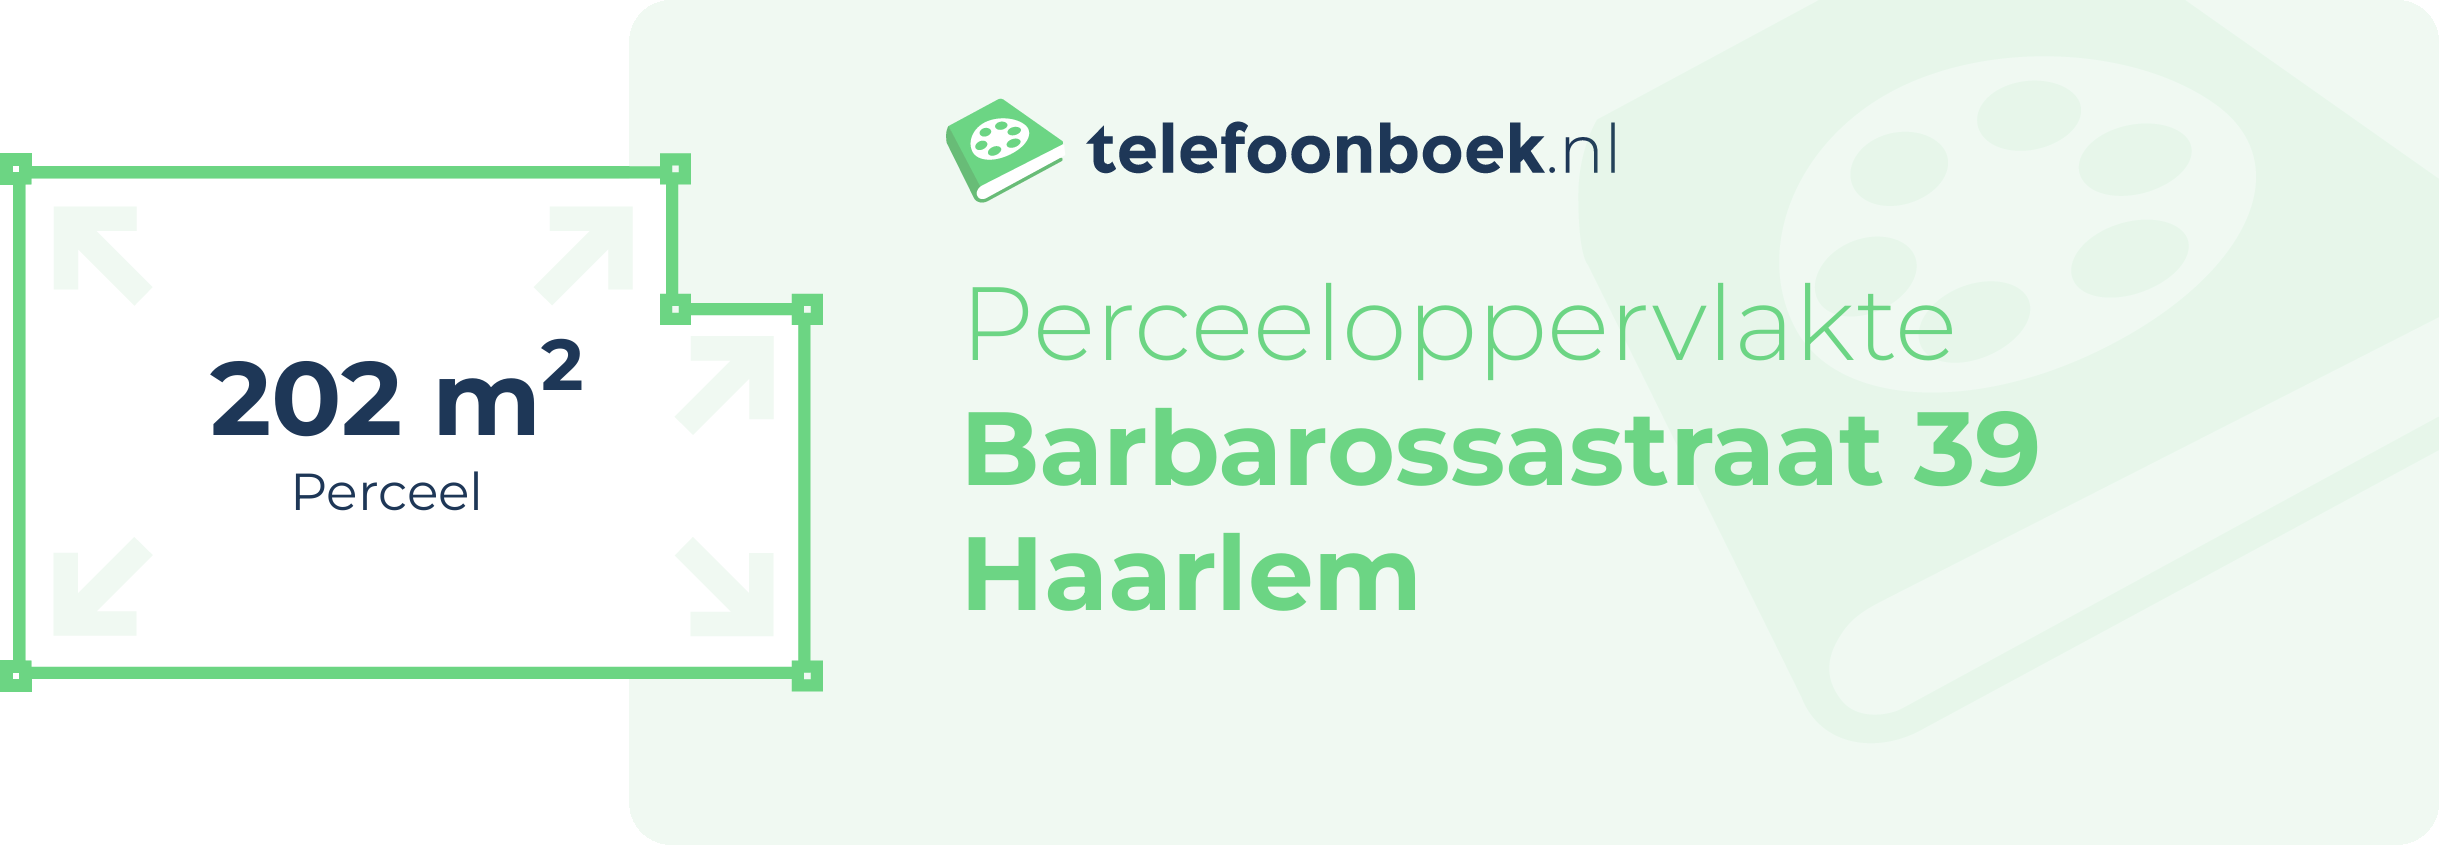 Perceeloppervlakte Barbarossastraat 39 Haarlem